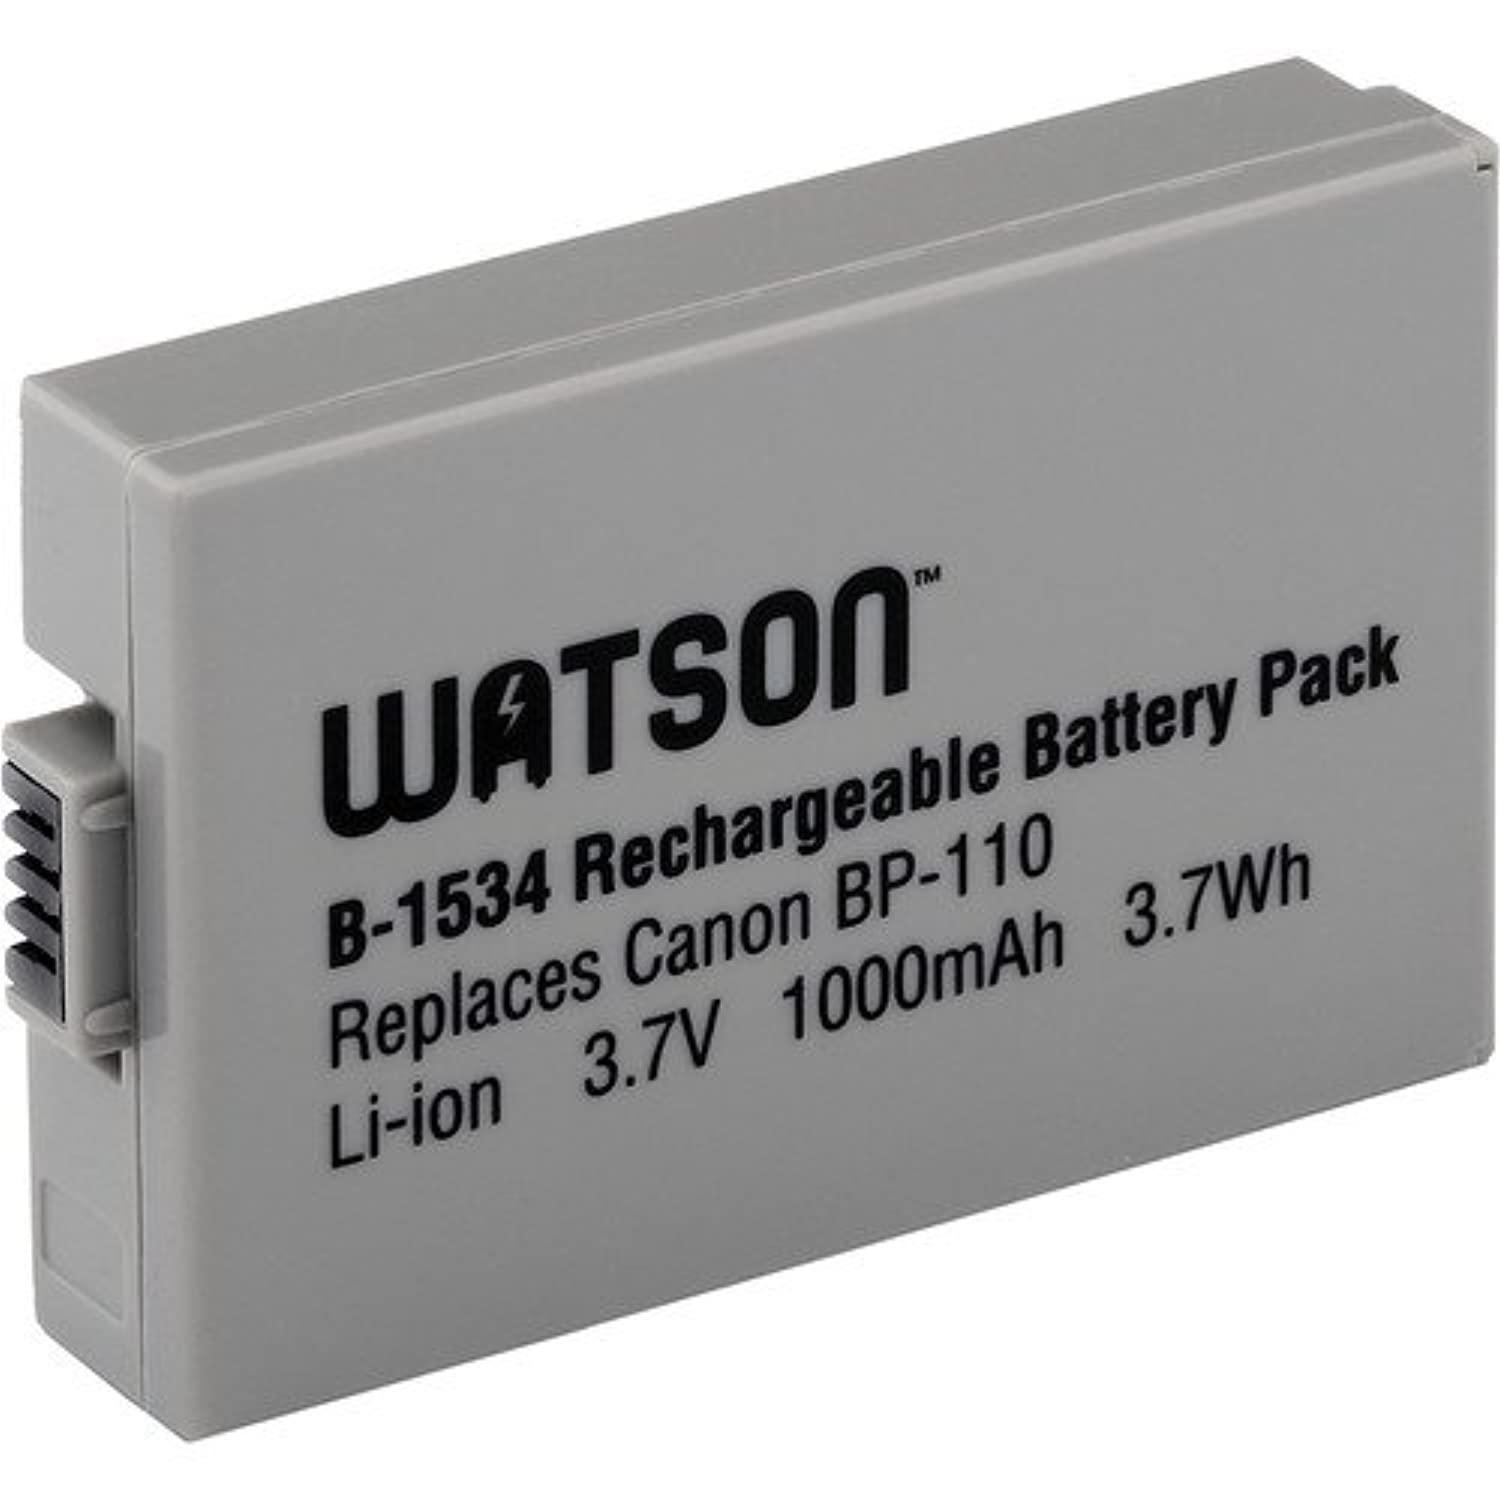 watson watson bp-110 lithium-ion battery (3.7v, 1000mah)